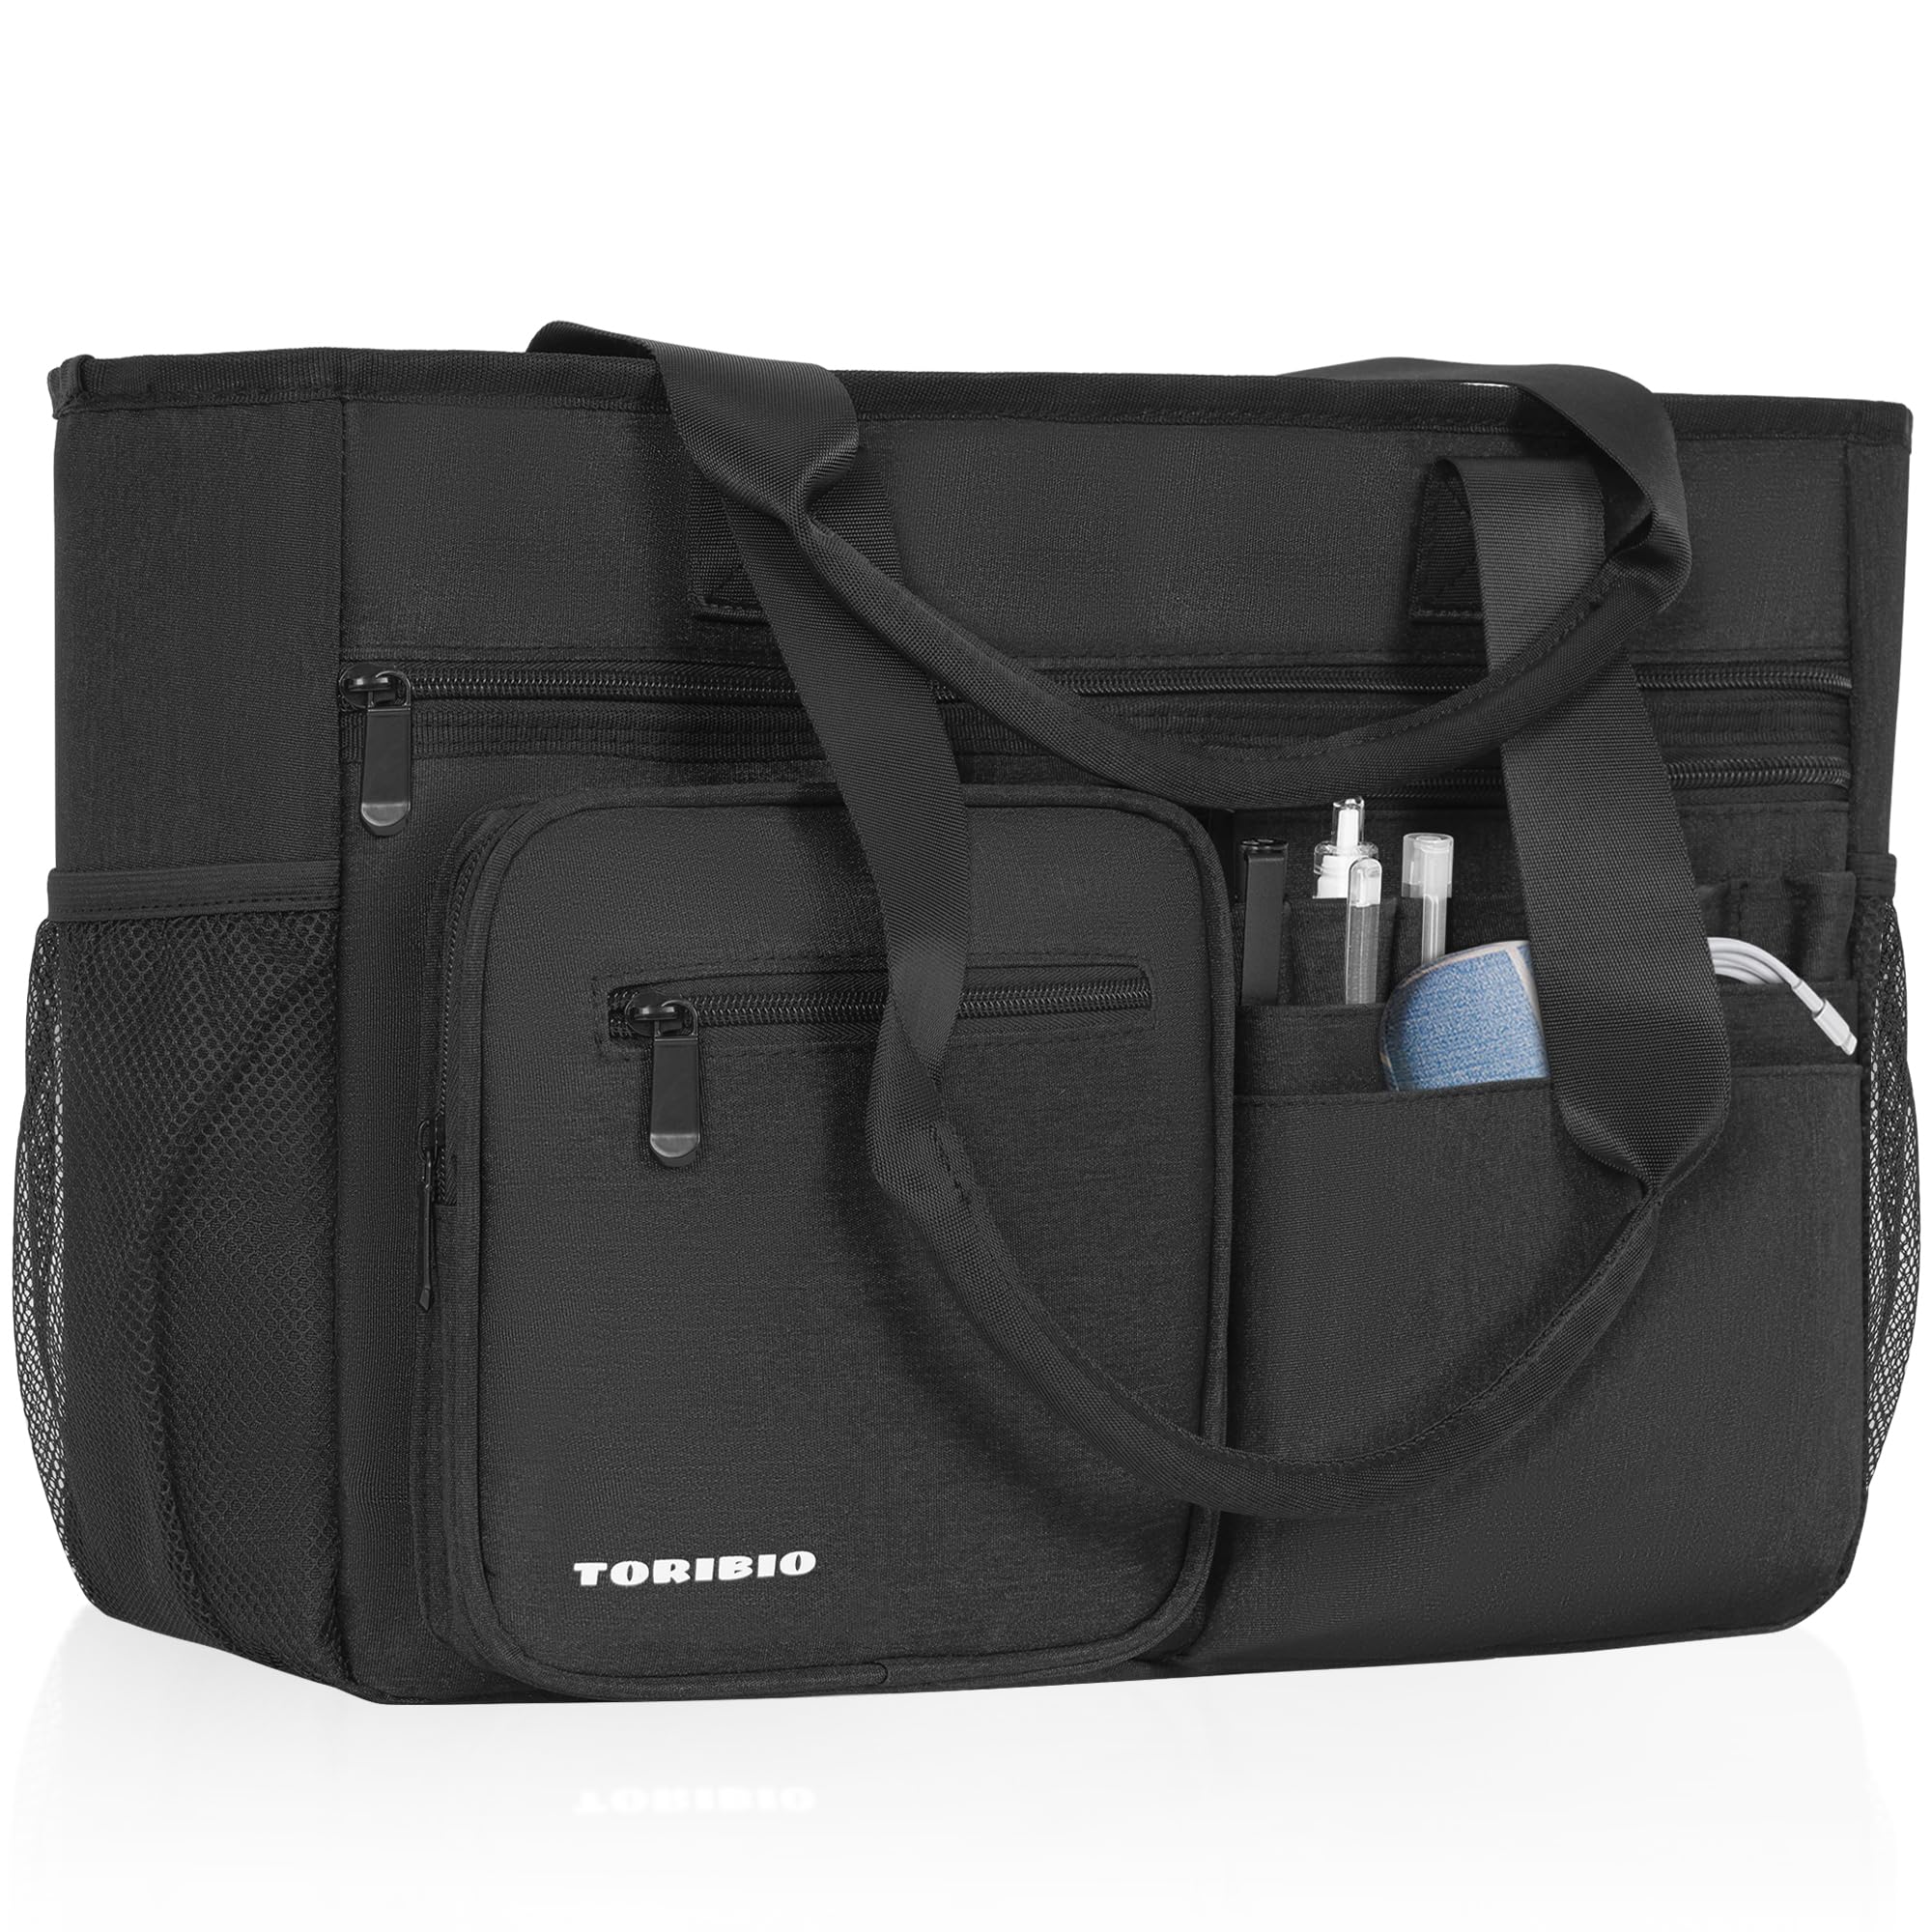 TORIBIO Nurse Bag for Work, Home Care Nursing with Padded Laptop Sleeve, Multi Pocket Shoulder Portable Storage Tote Bag for Working/Teacher/Students/Clinical